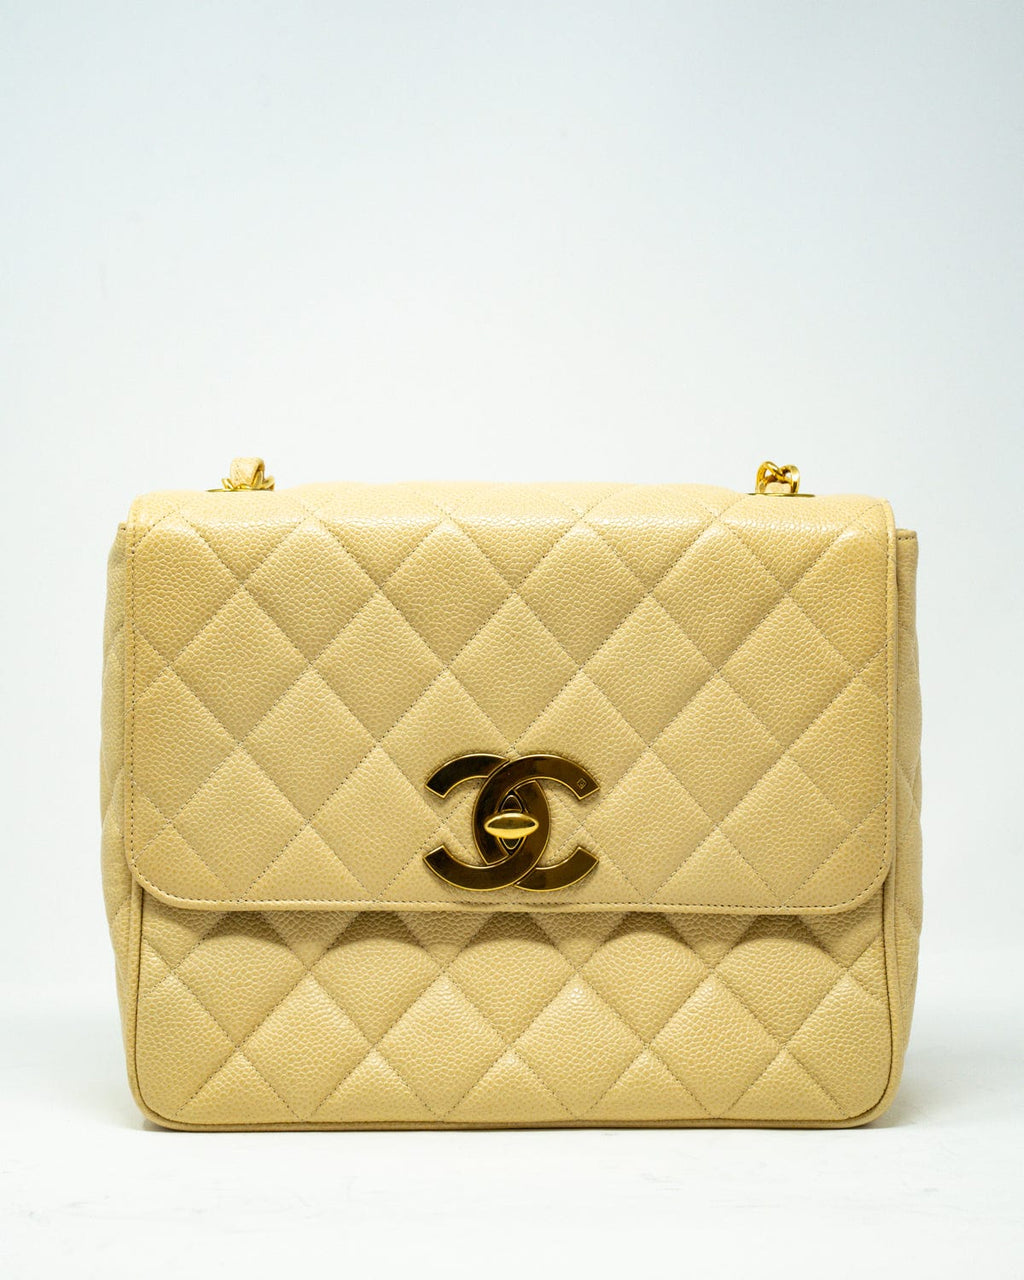 Chanel Caviar skin Satchel style crossbody bag with Jumbo CC lock